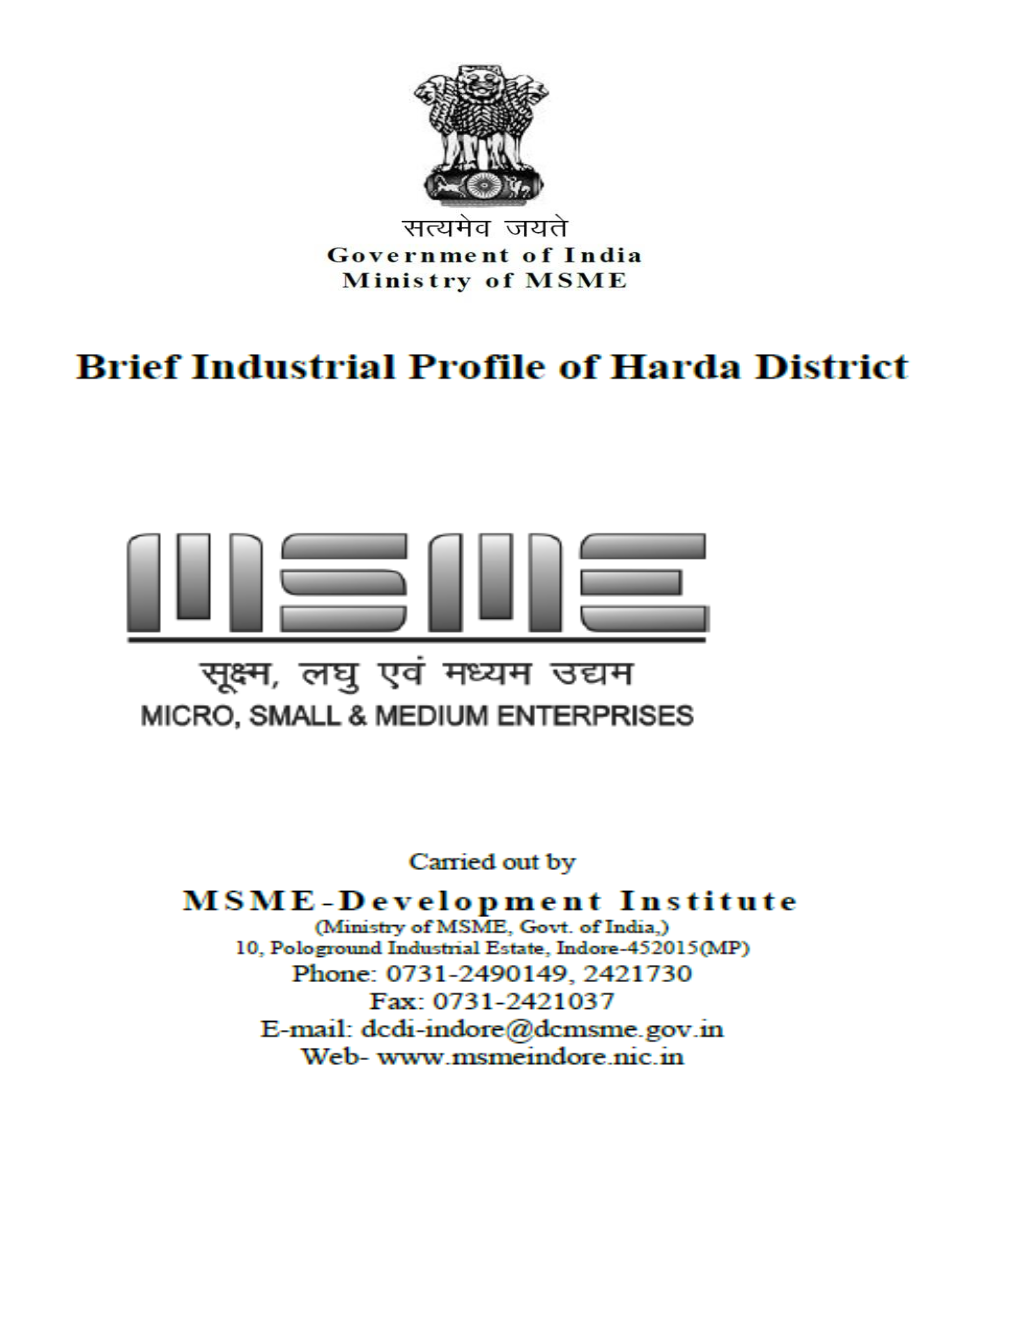 Brief Industrial Profile of Harda District